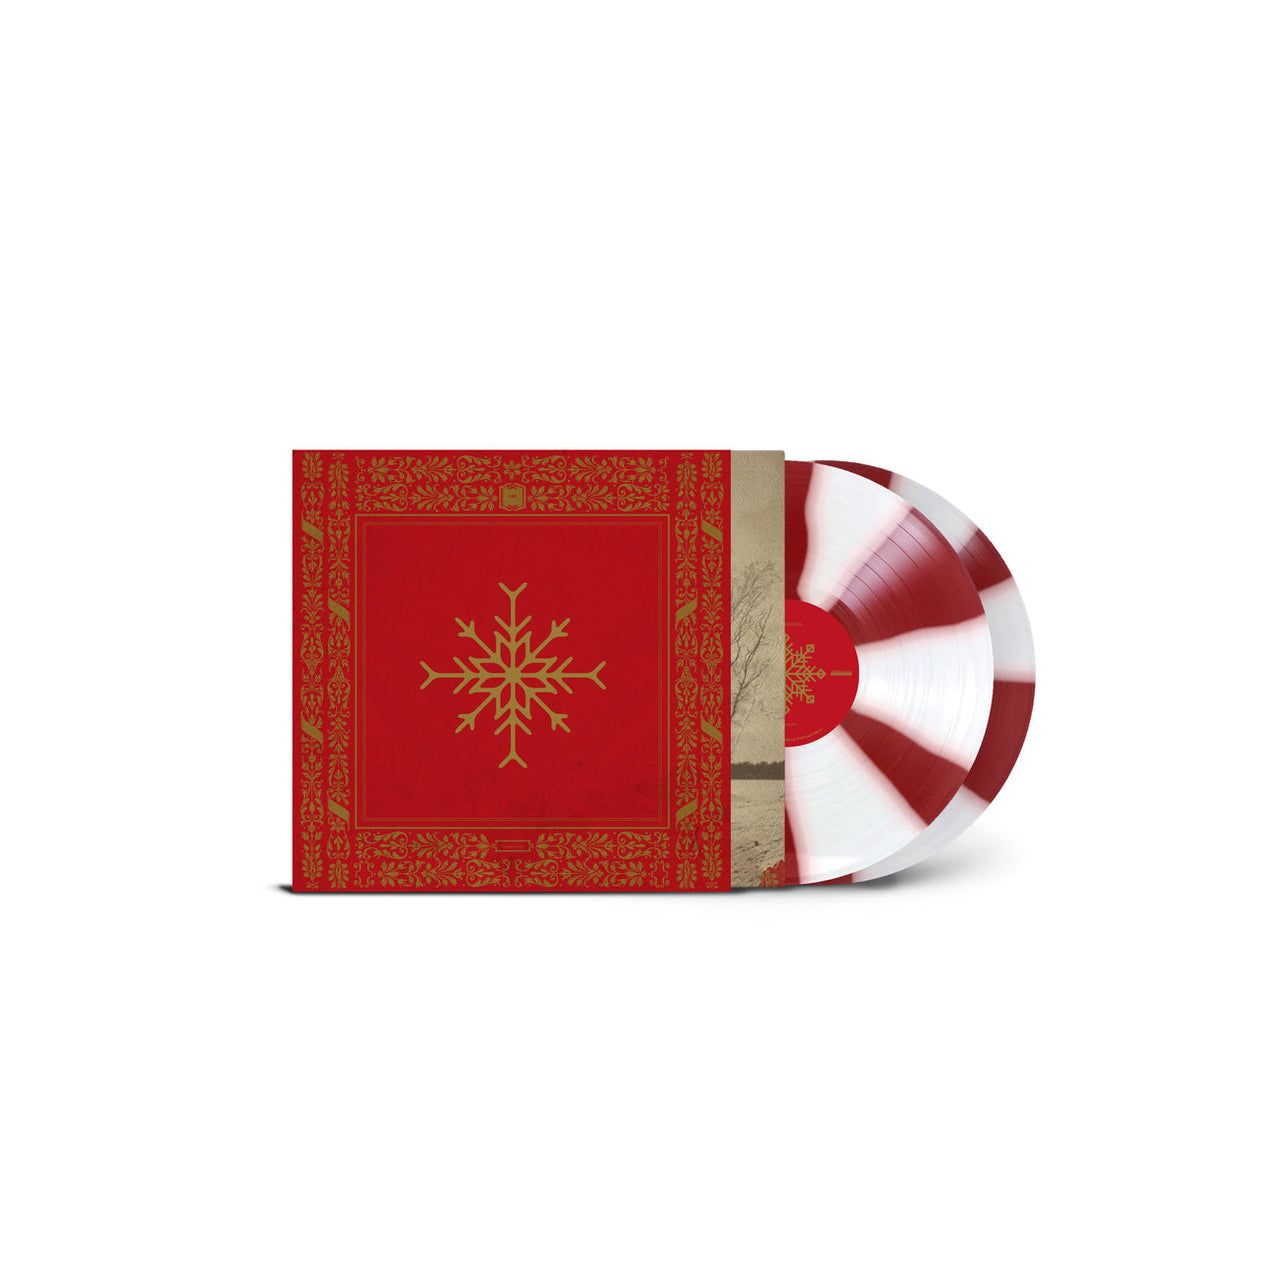 August Burns Red: Sleddin' Hill Vinyl LP (Candy Cane)